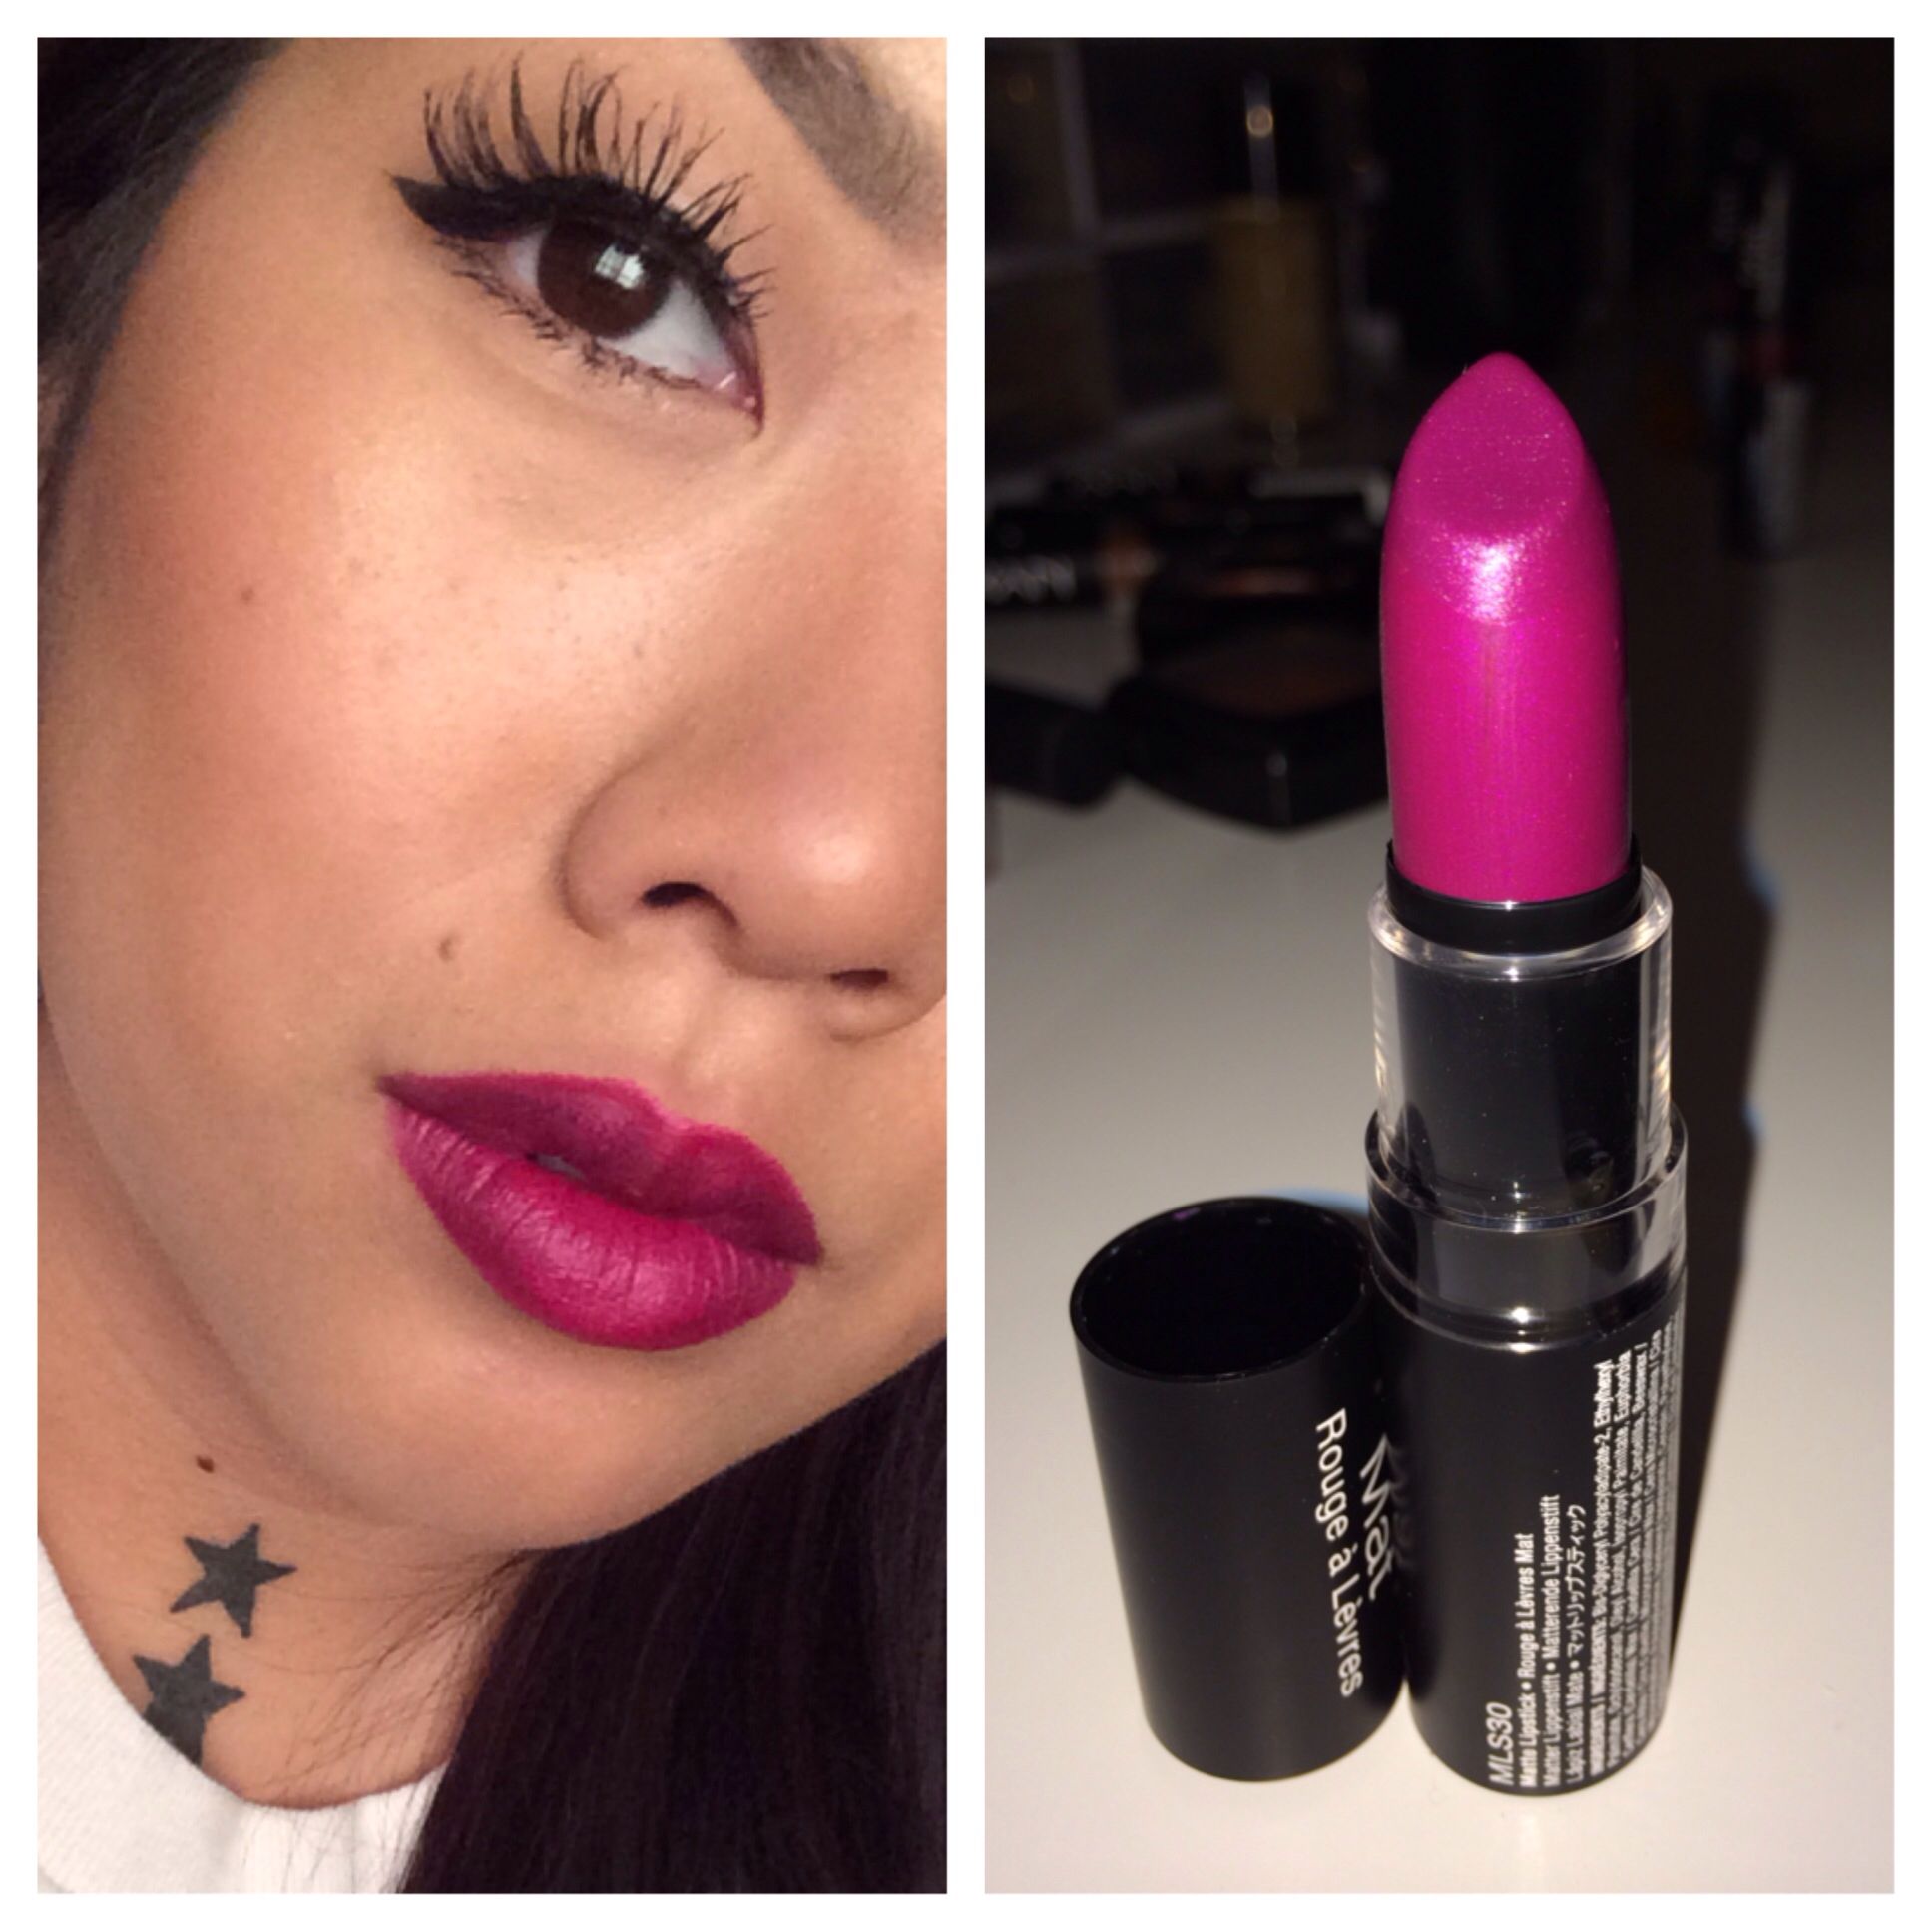 nyx lipstick matte colors